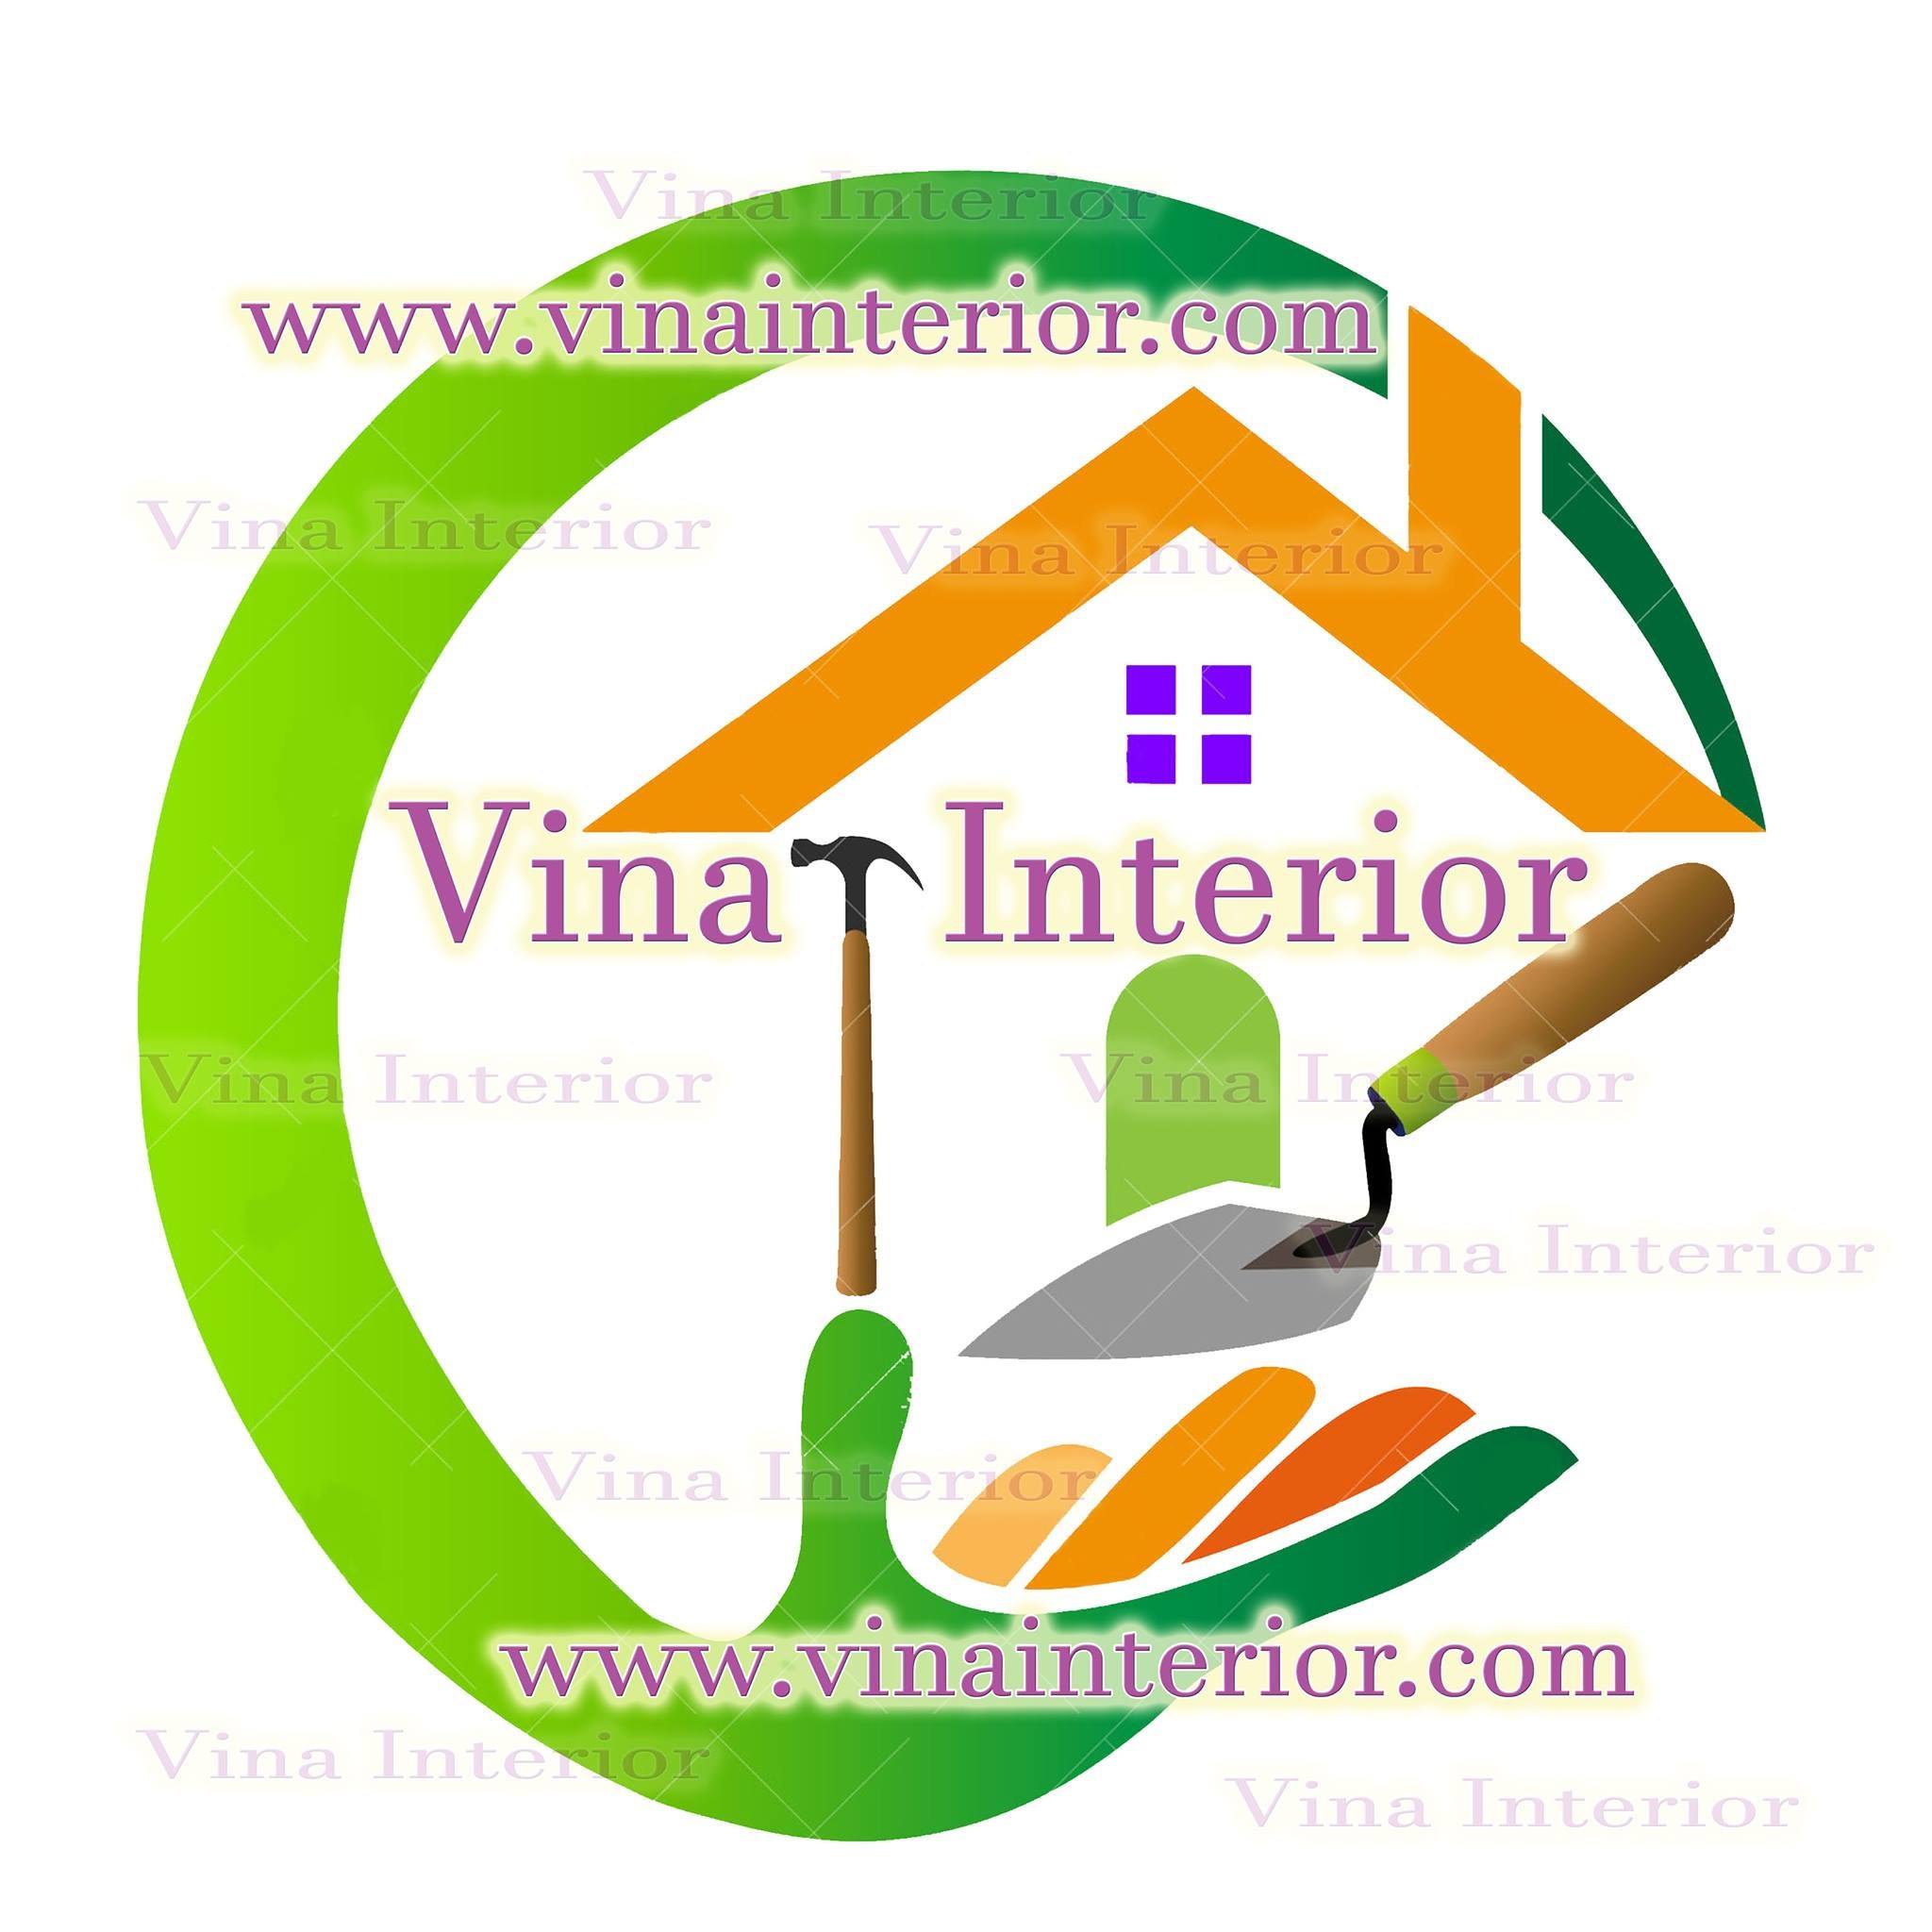 Vina Interior|Architect|Professional Services